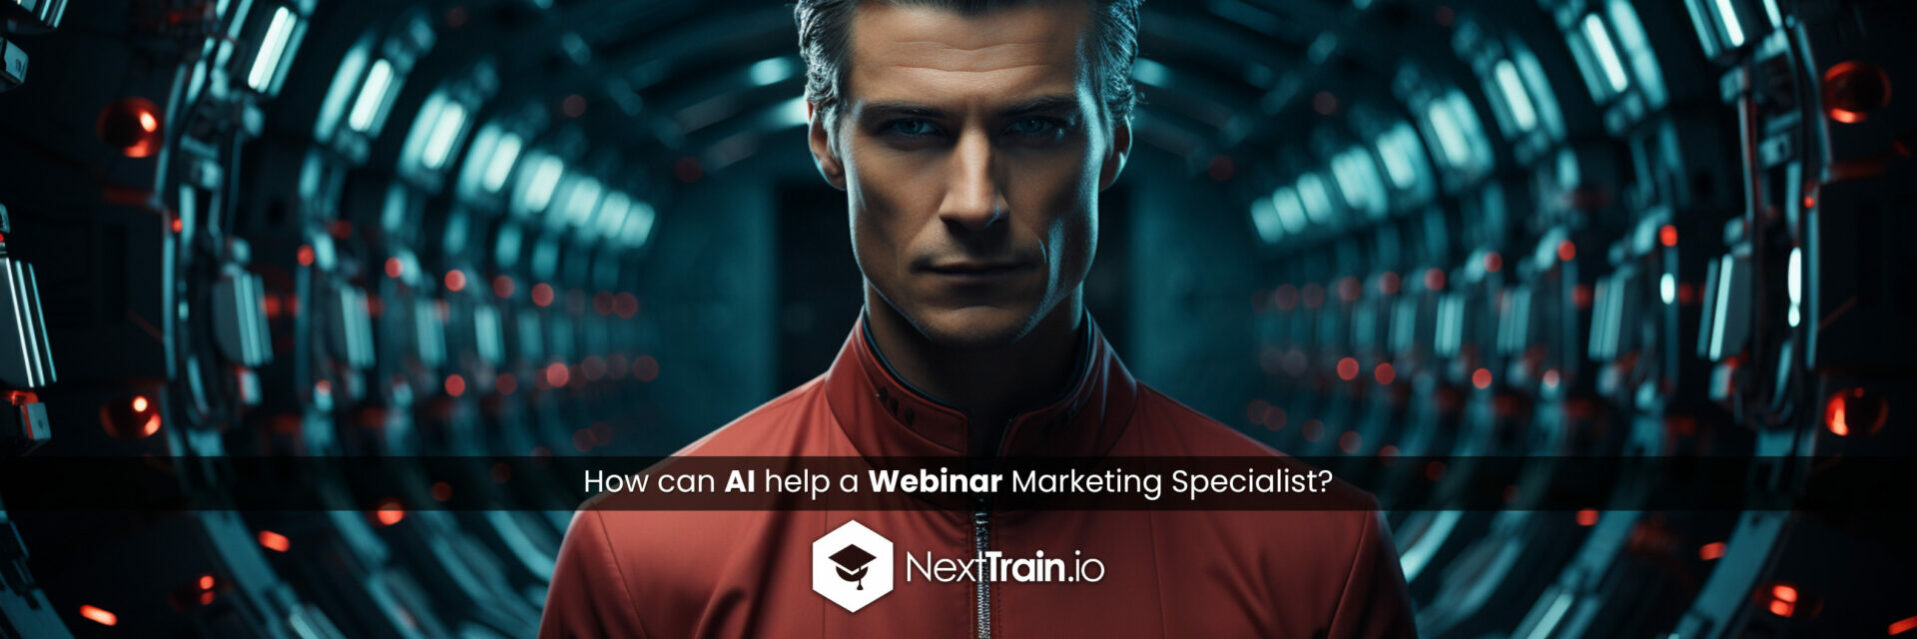 How can AI help a Webinar Marketing Specialist?